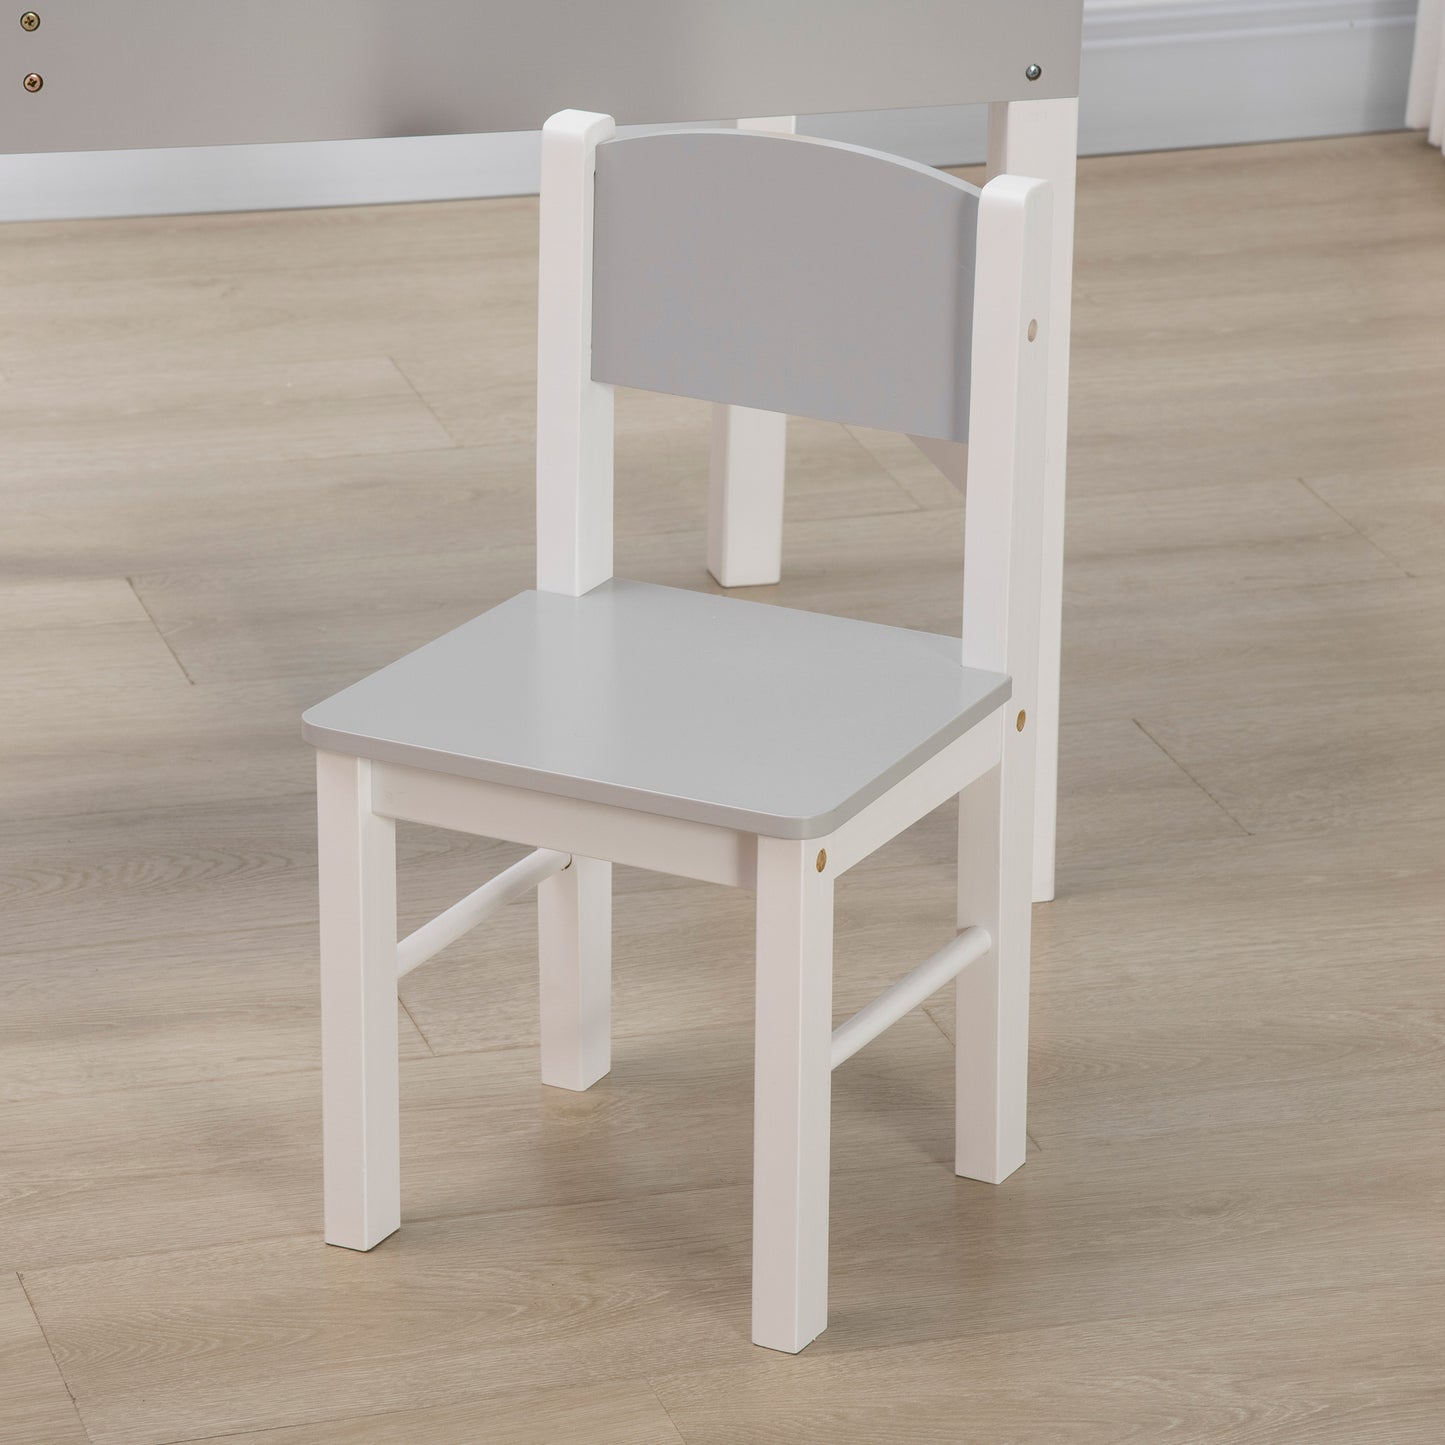 ZONEKIZ Kids Table and Chair Set, with Storage Space - Grey